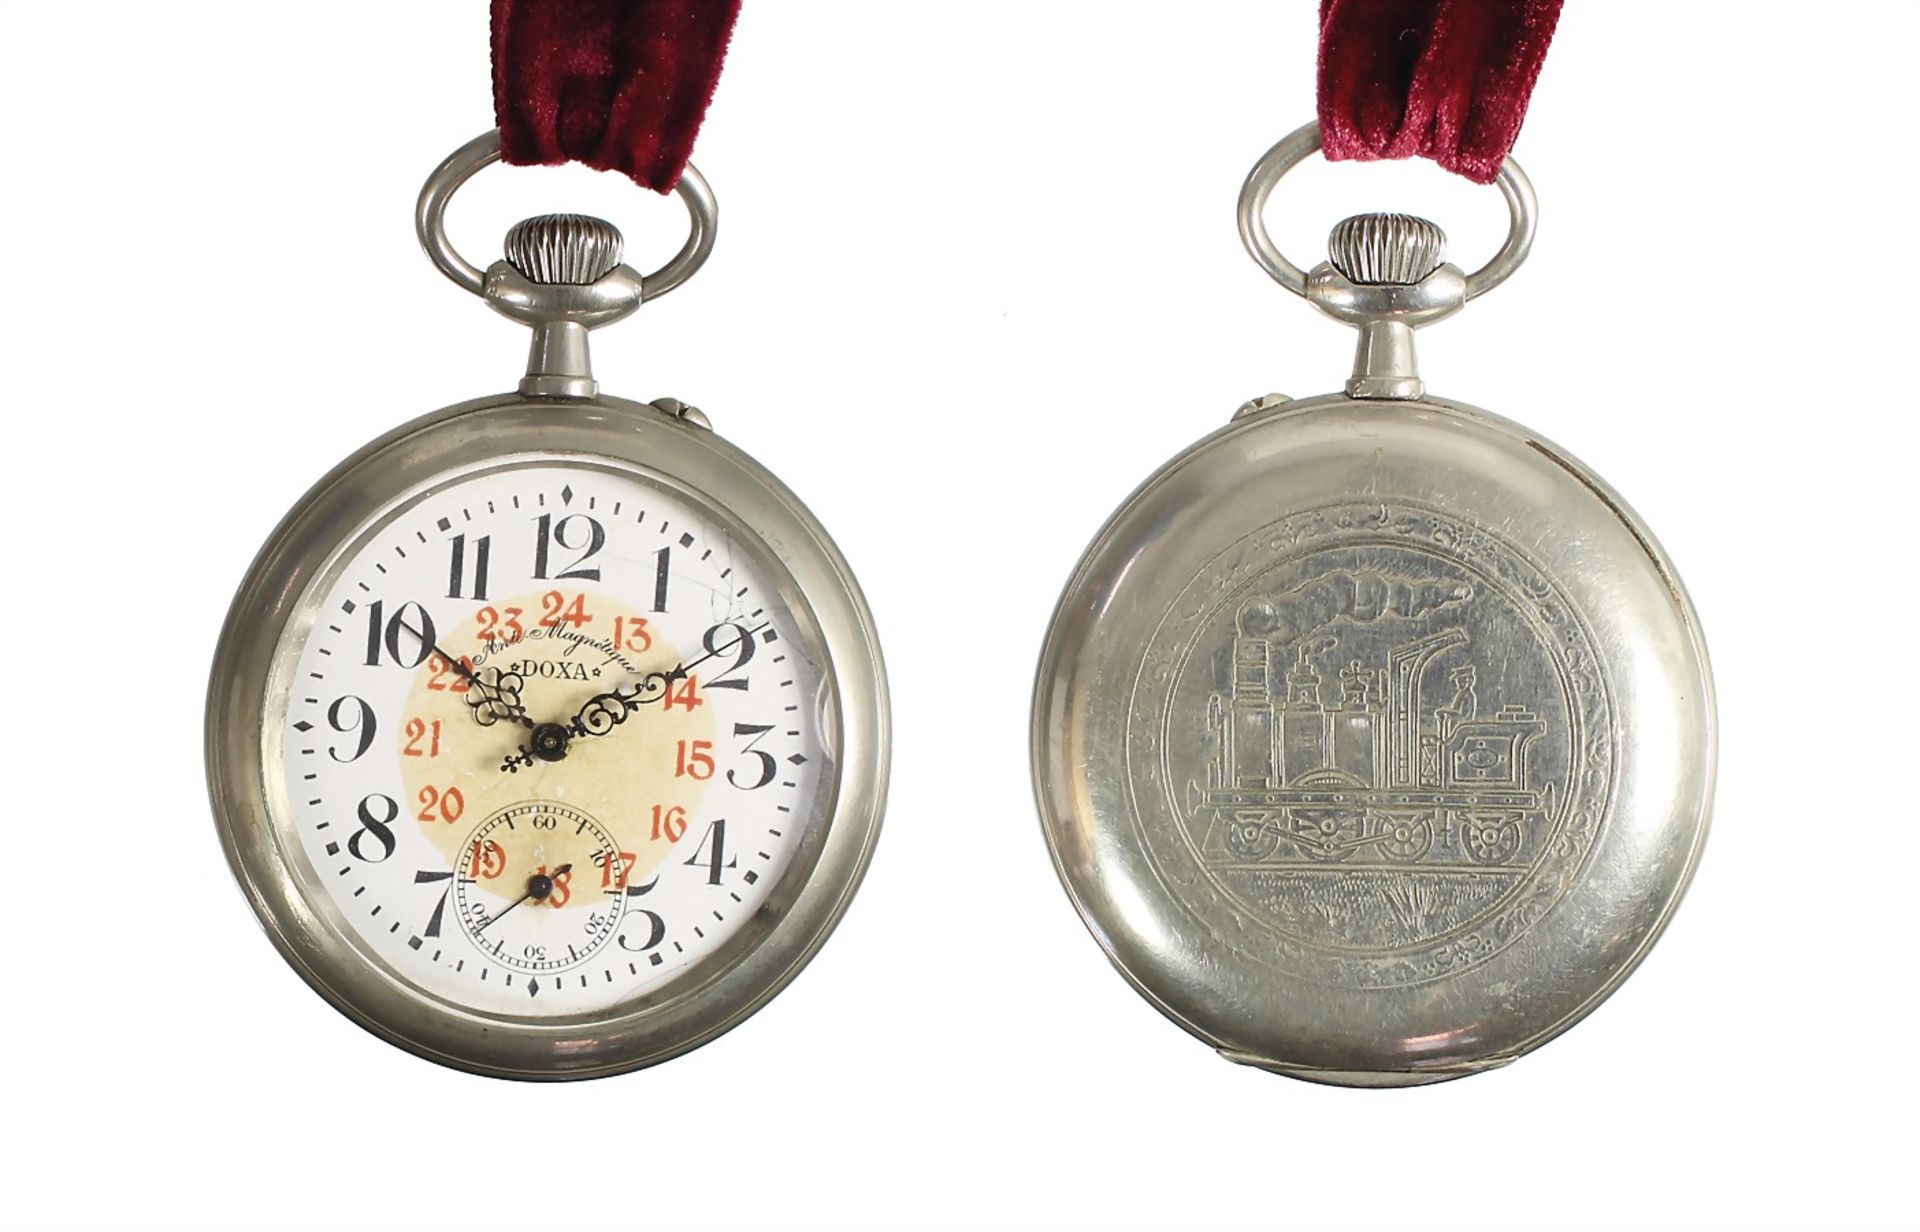 railroader clock, signed "DOXA" (metal Argentan Depose), around 1905, white enamel clockface (